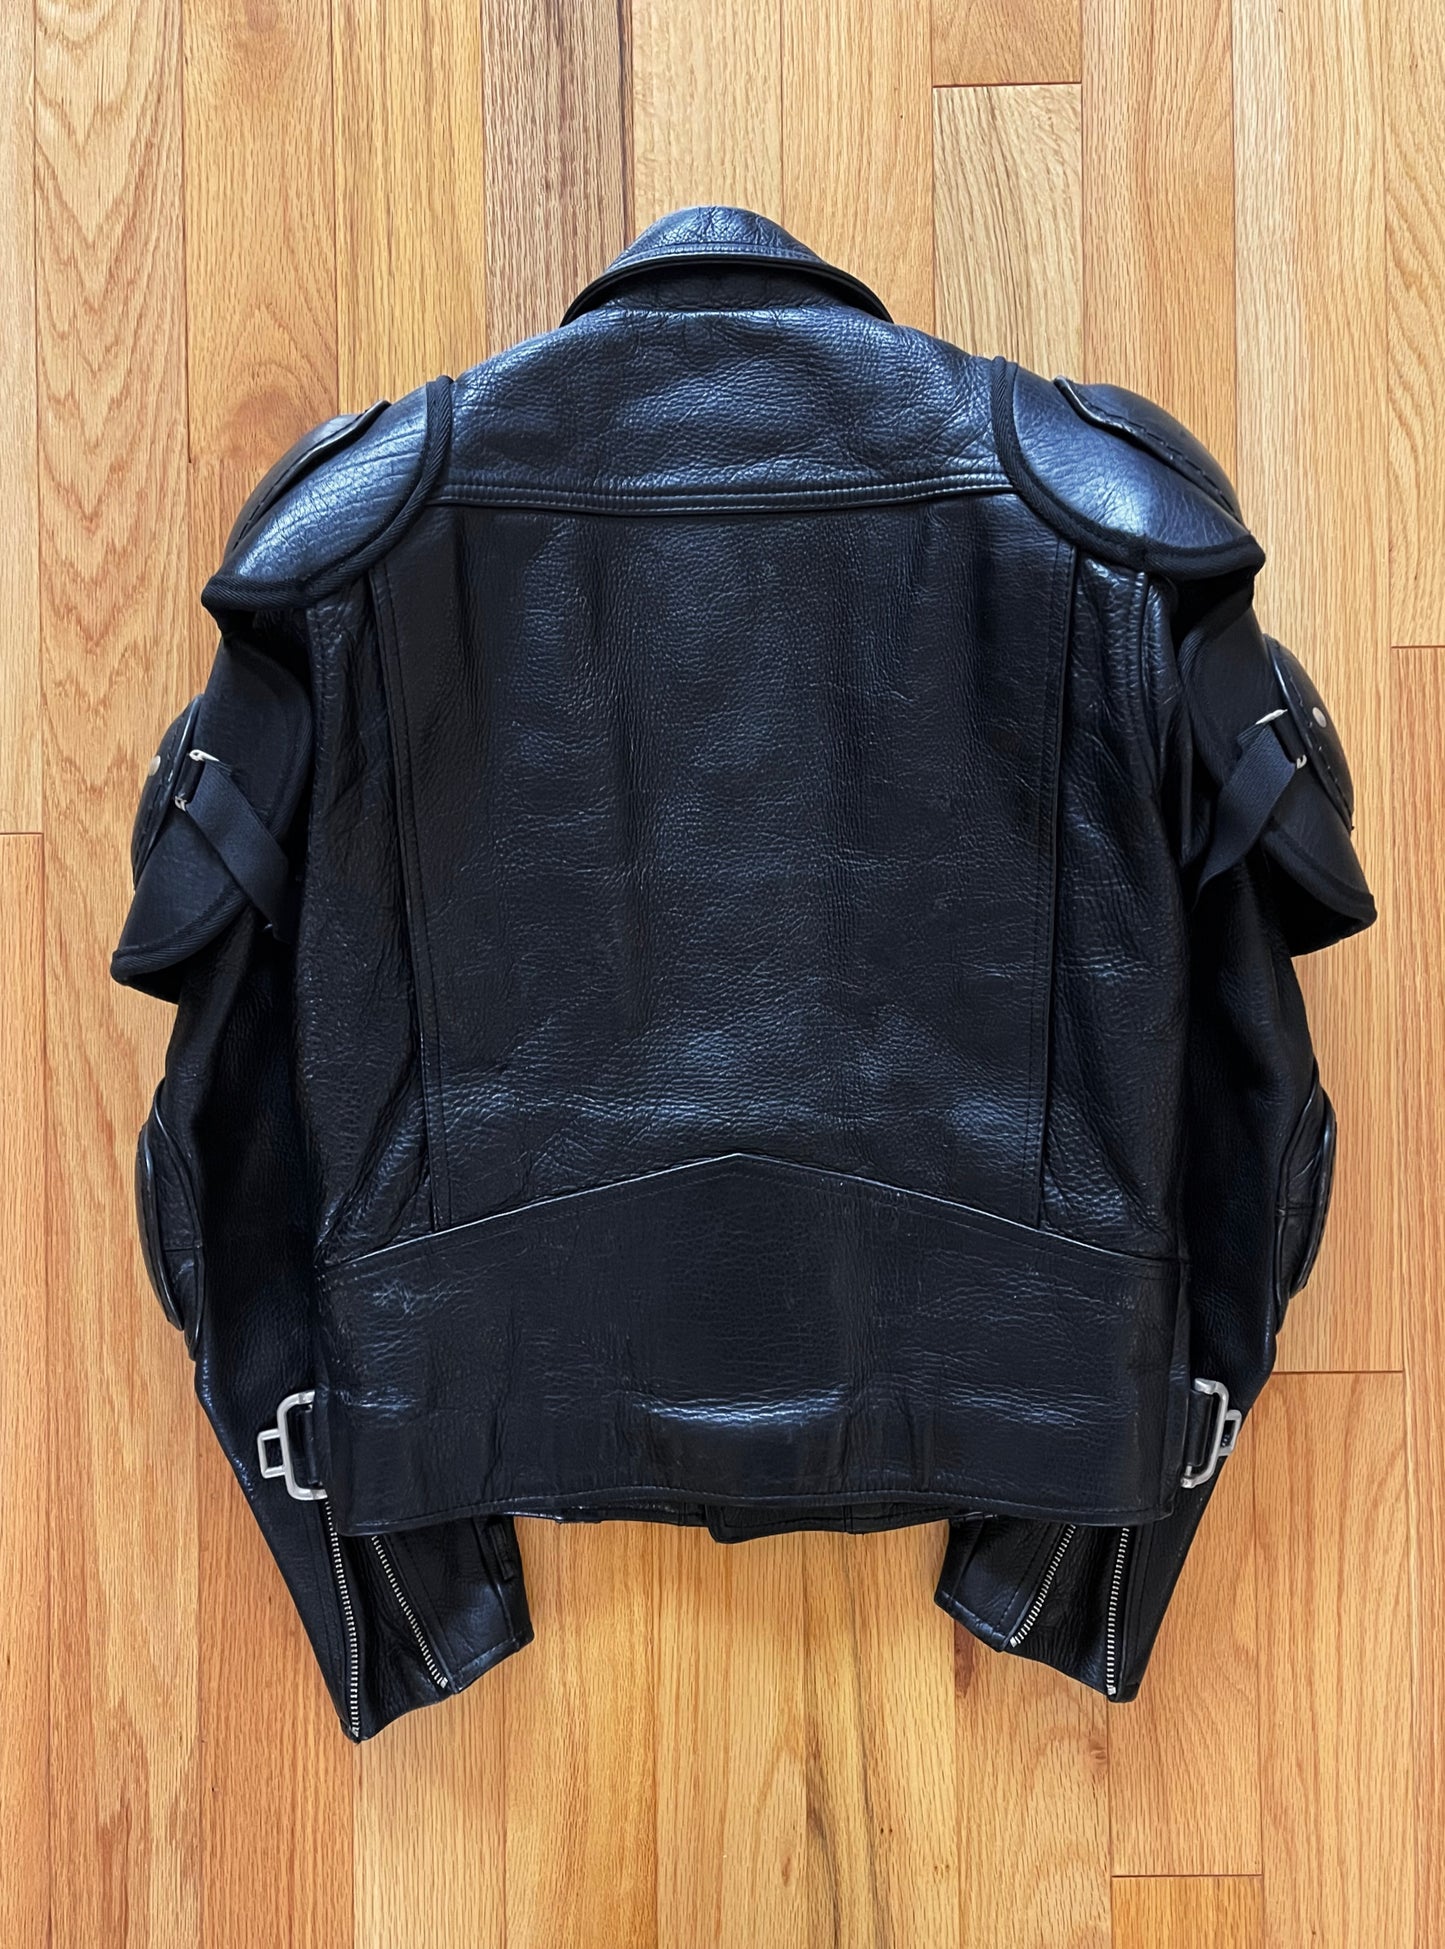 Kadoya Battlesuit Armoured Black Leather Biker Jacket